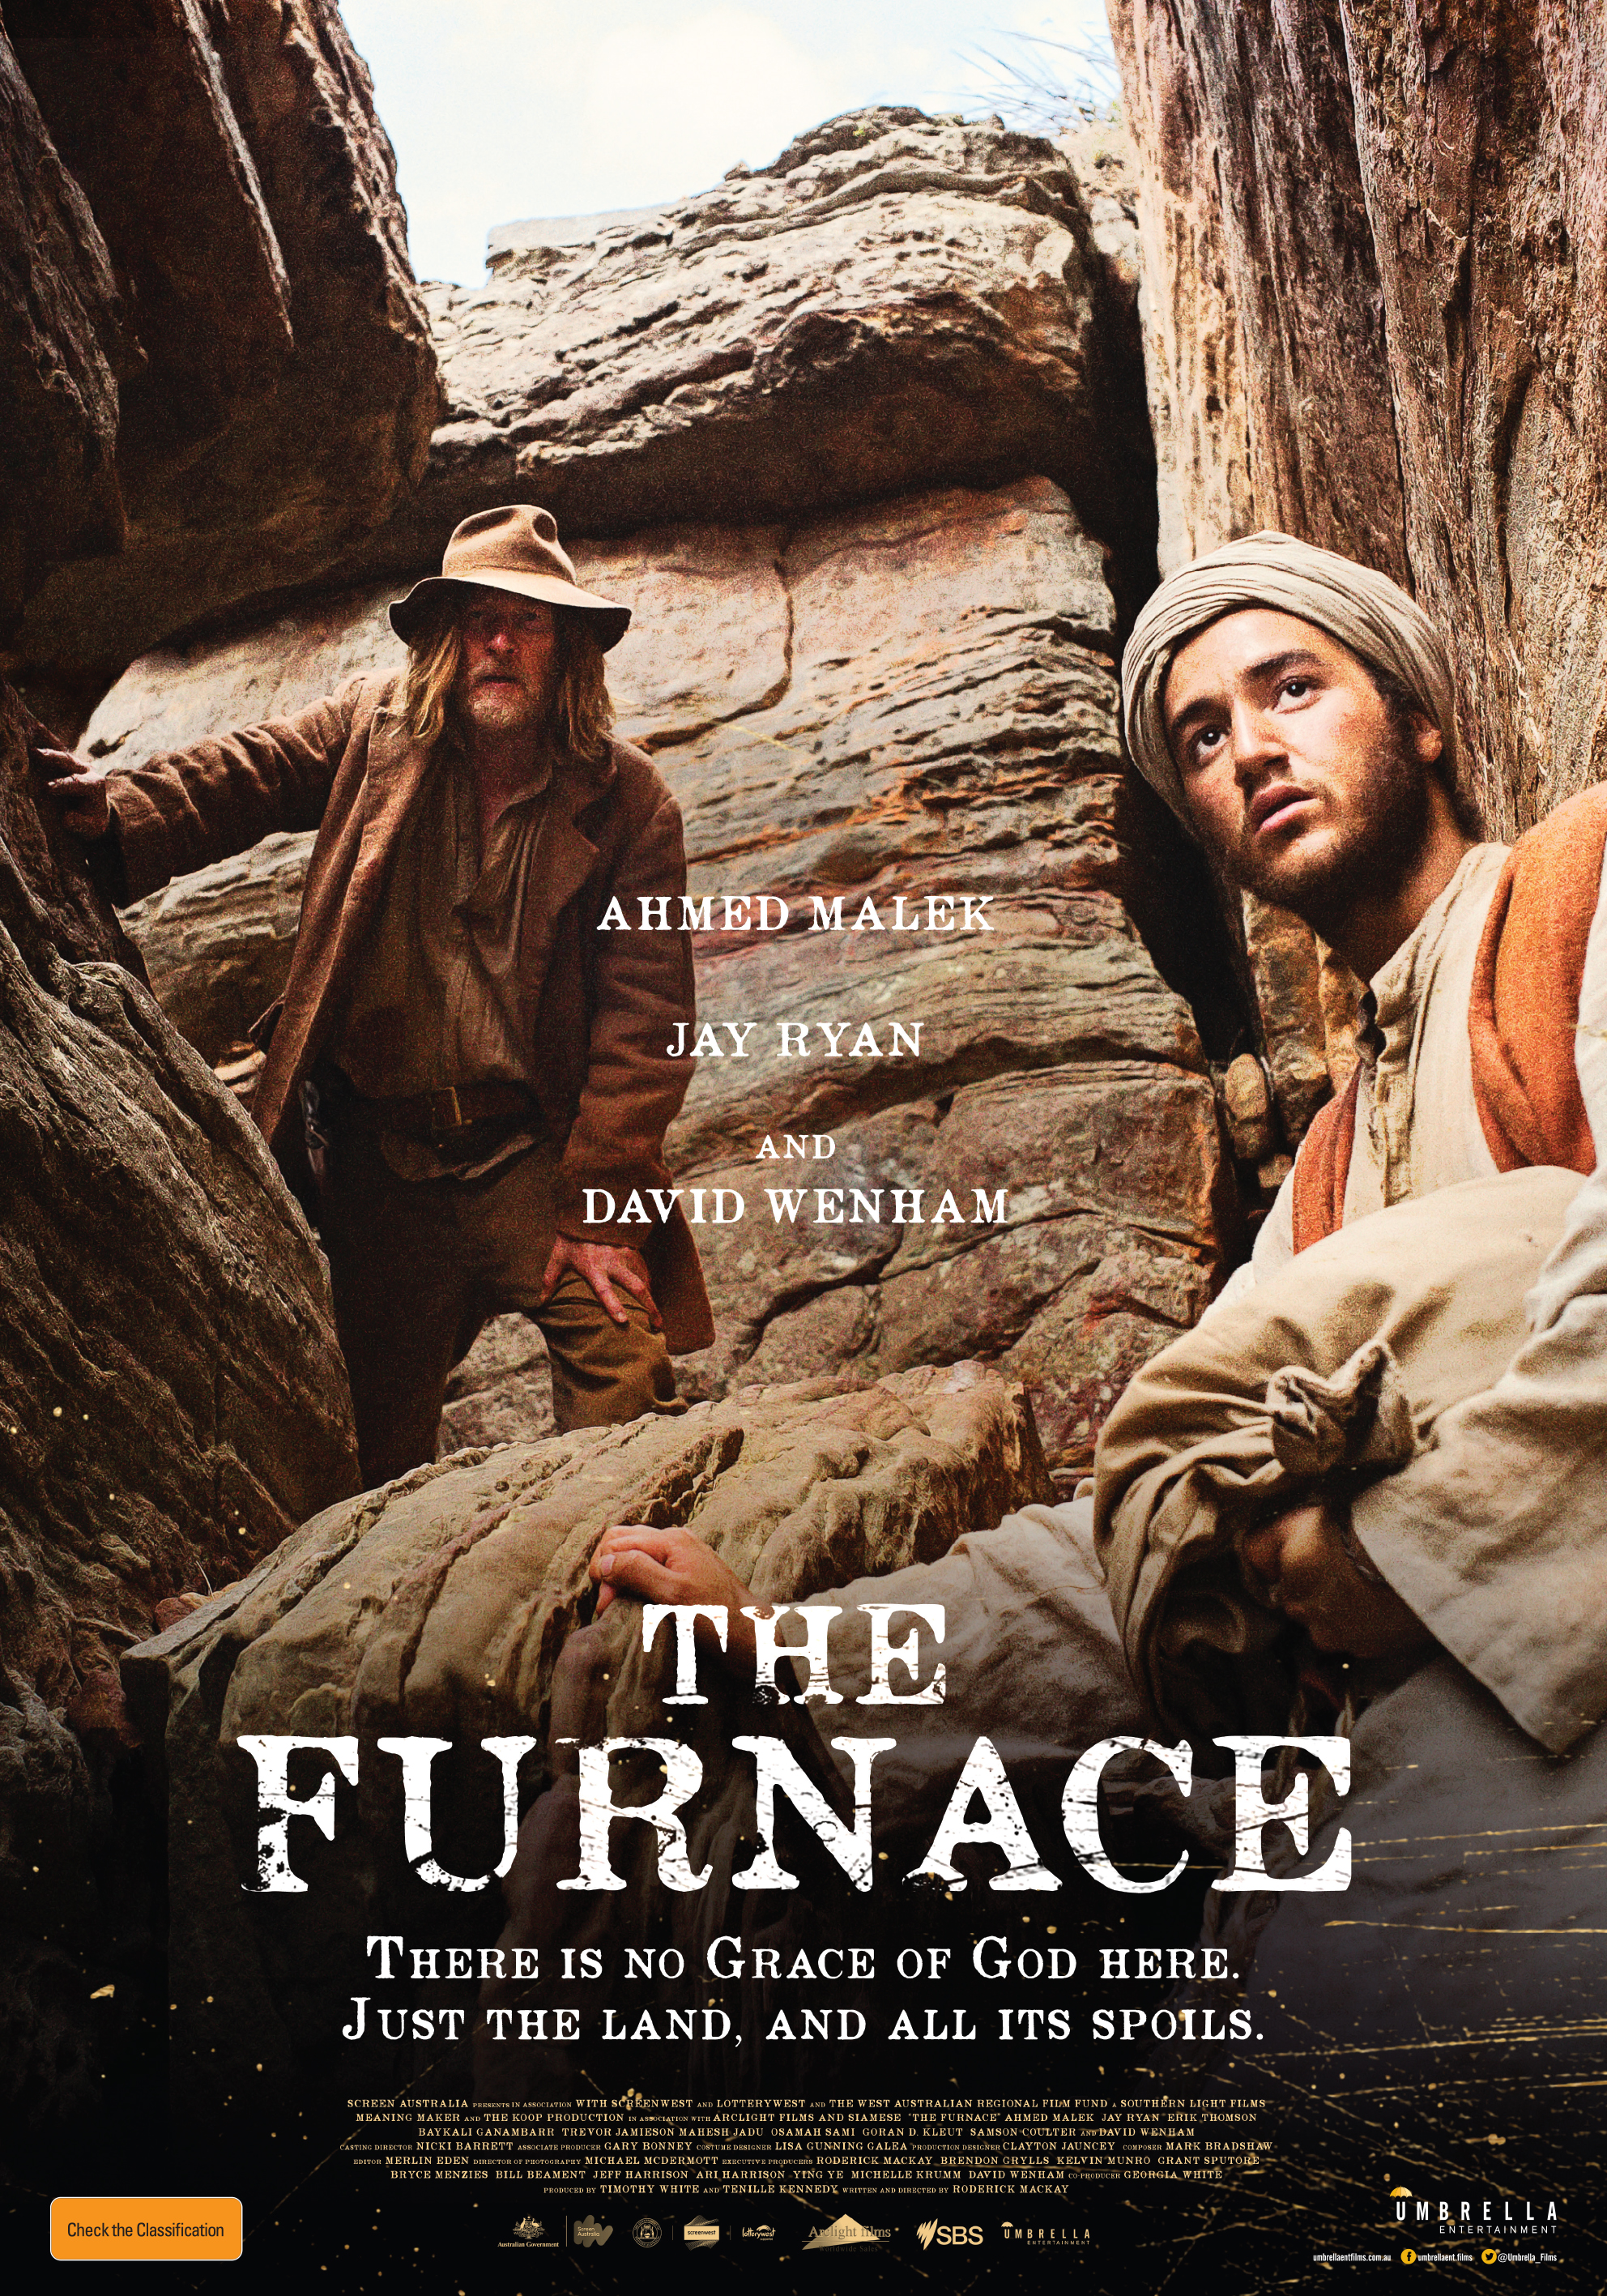 Stiahni si Filmy CZ/SK dabing  Výheň / The Furnace (2020)(CZ)[1080p] = CSFD 64%